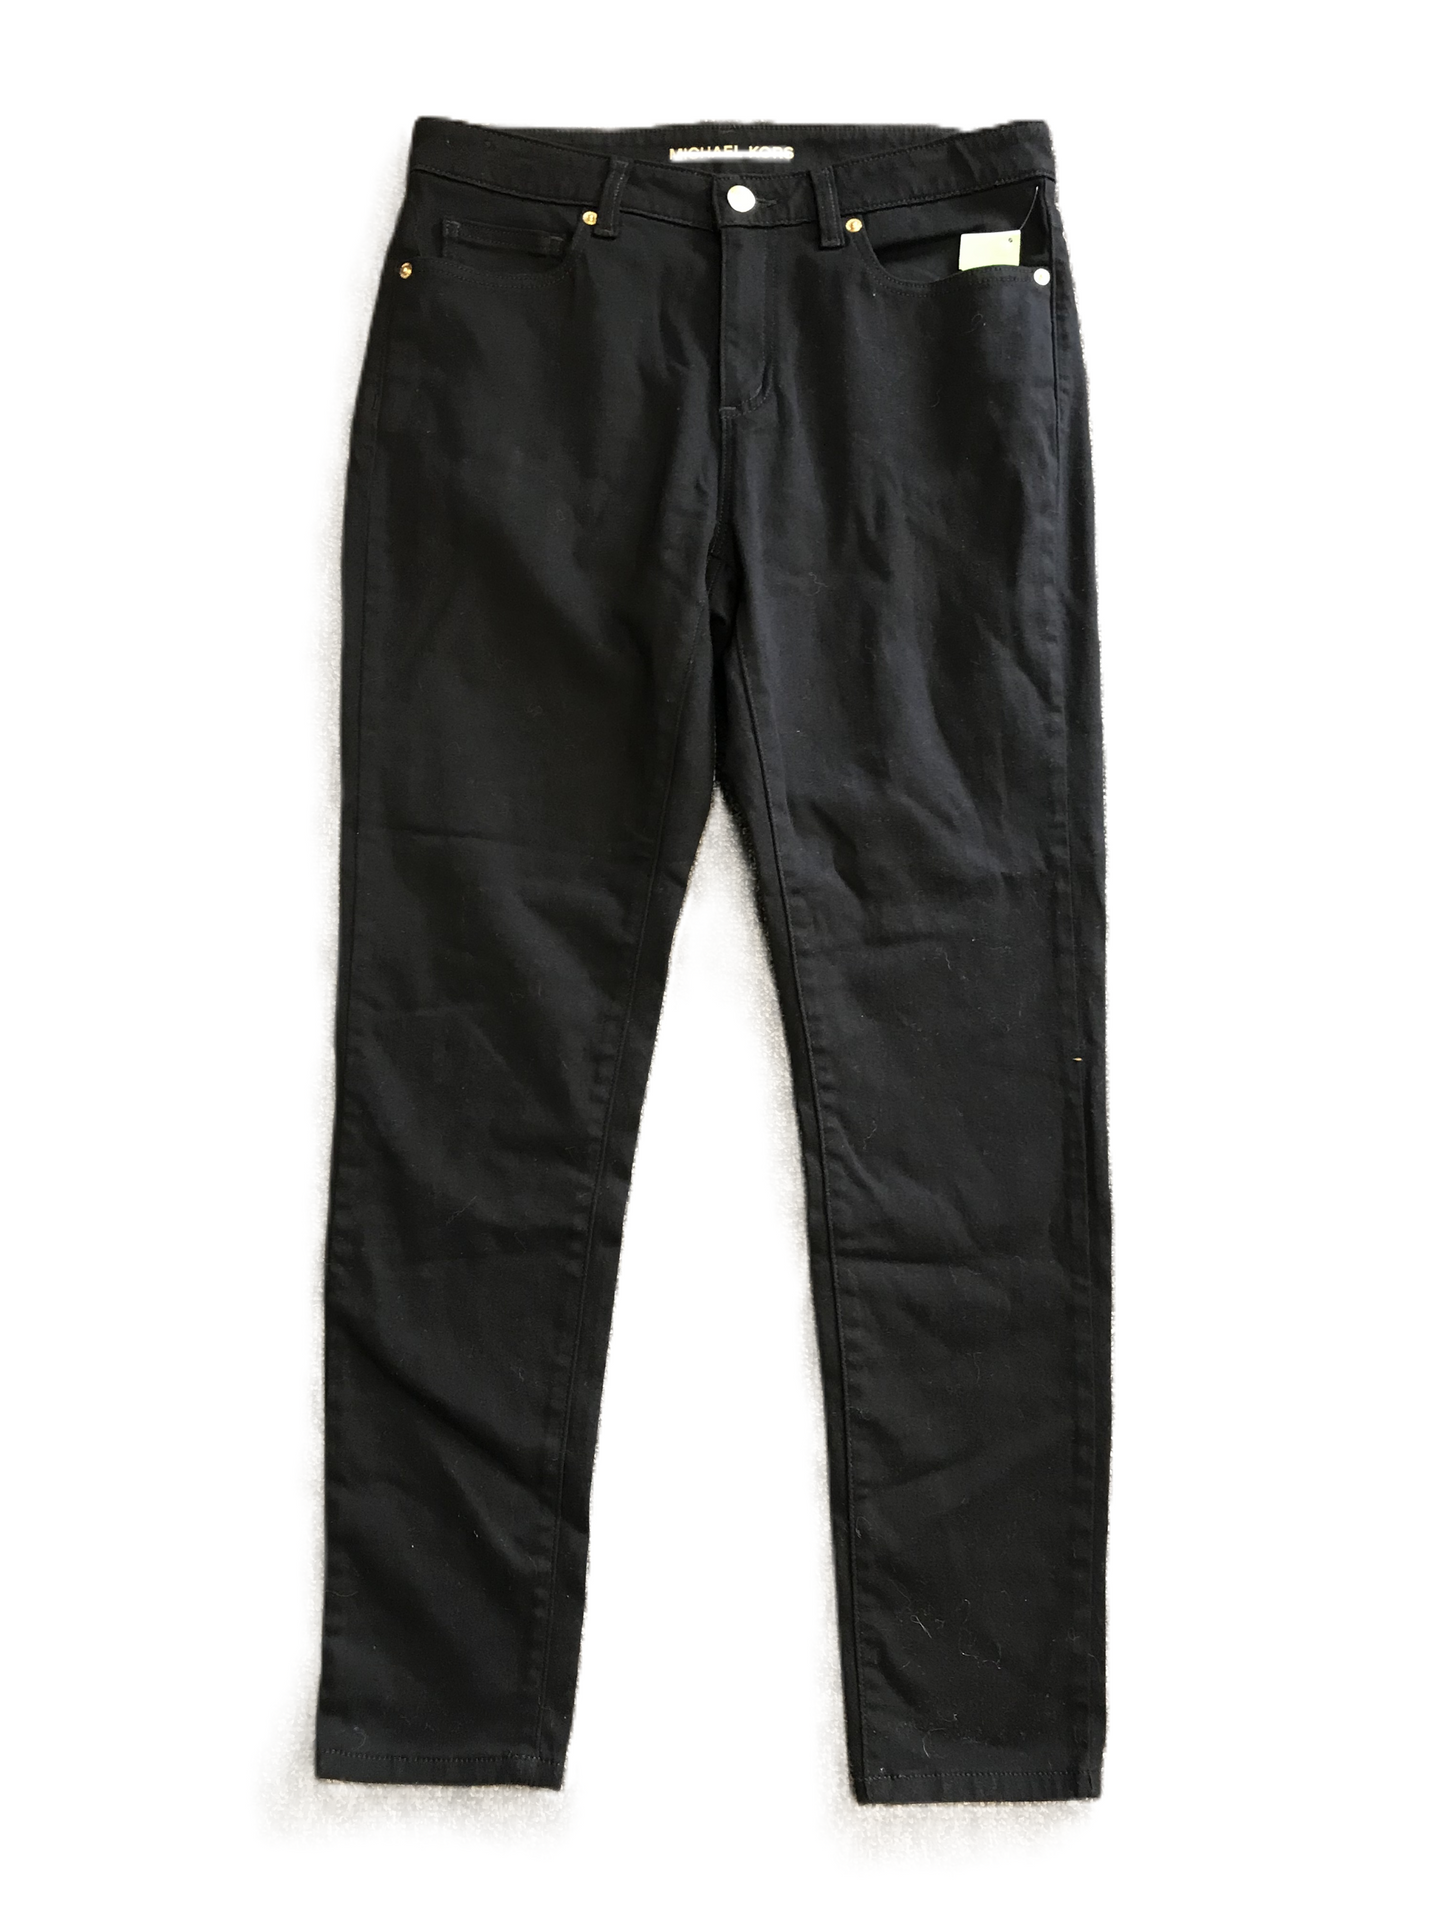 Pants Chinos & Khakis By Michael Kors  Size: 8